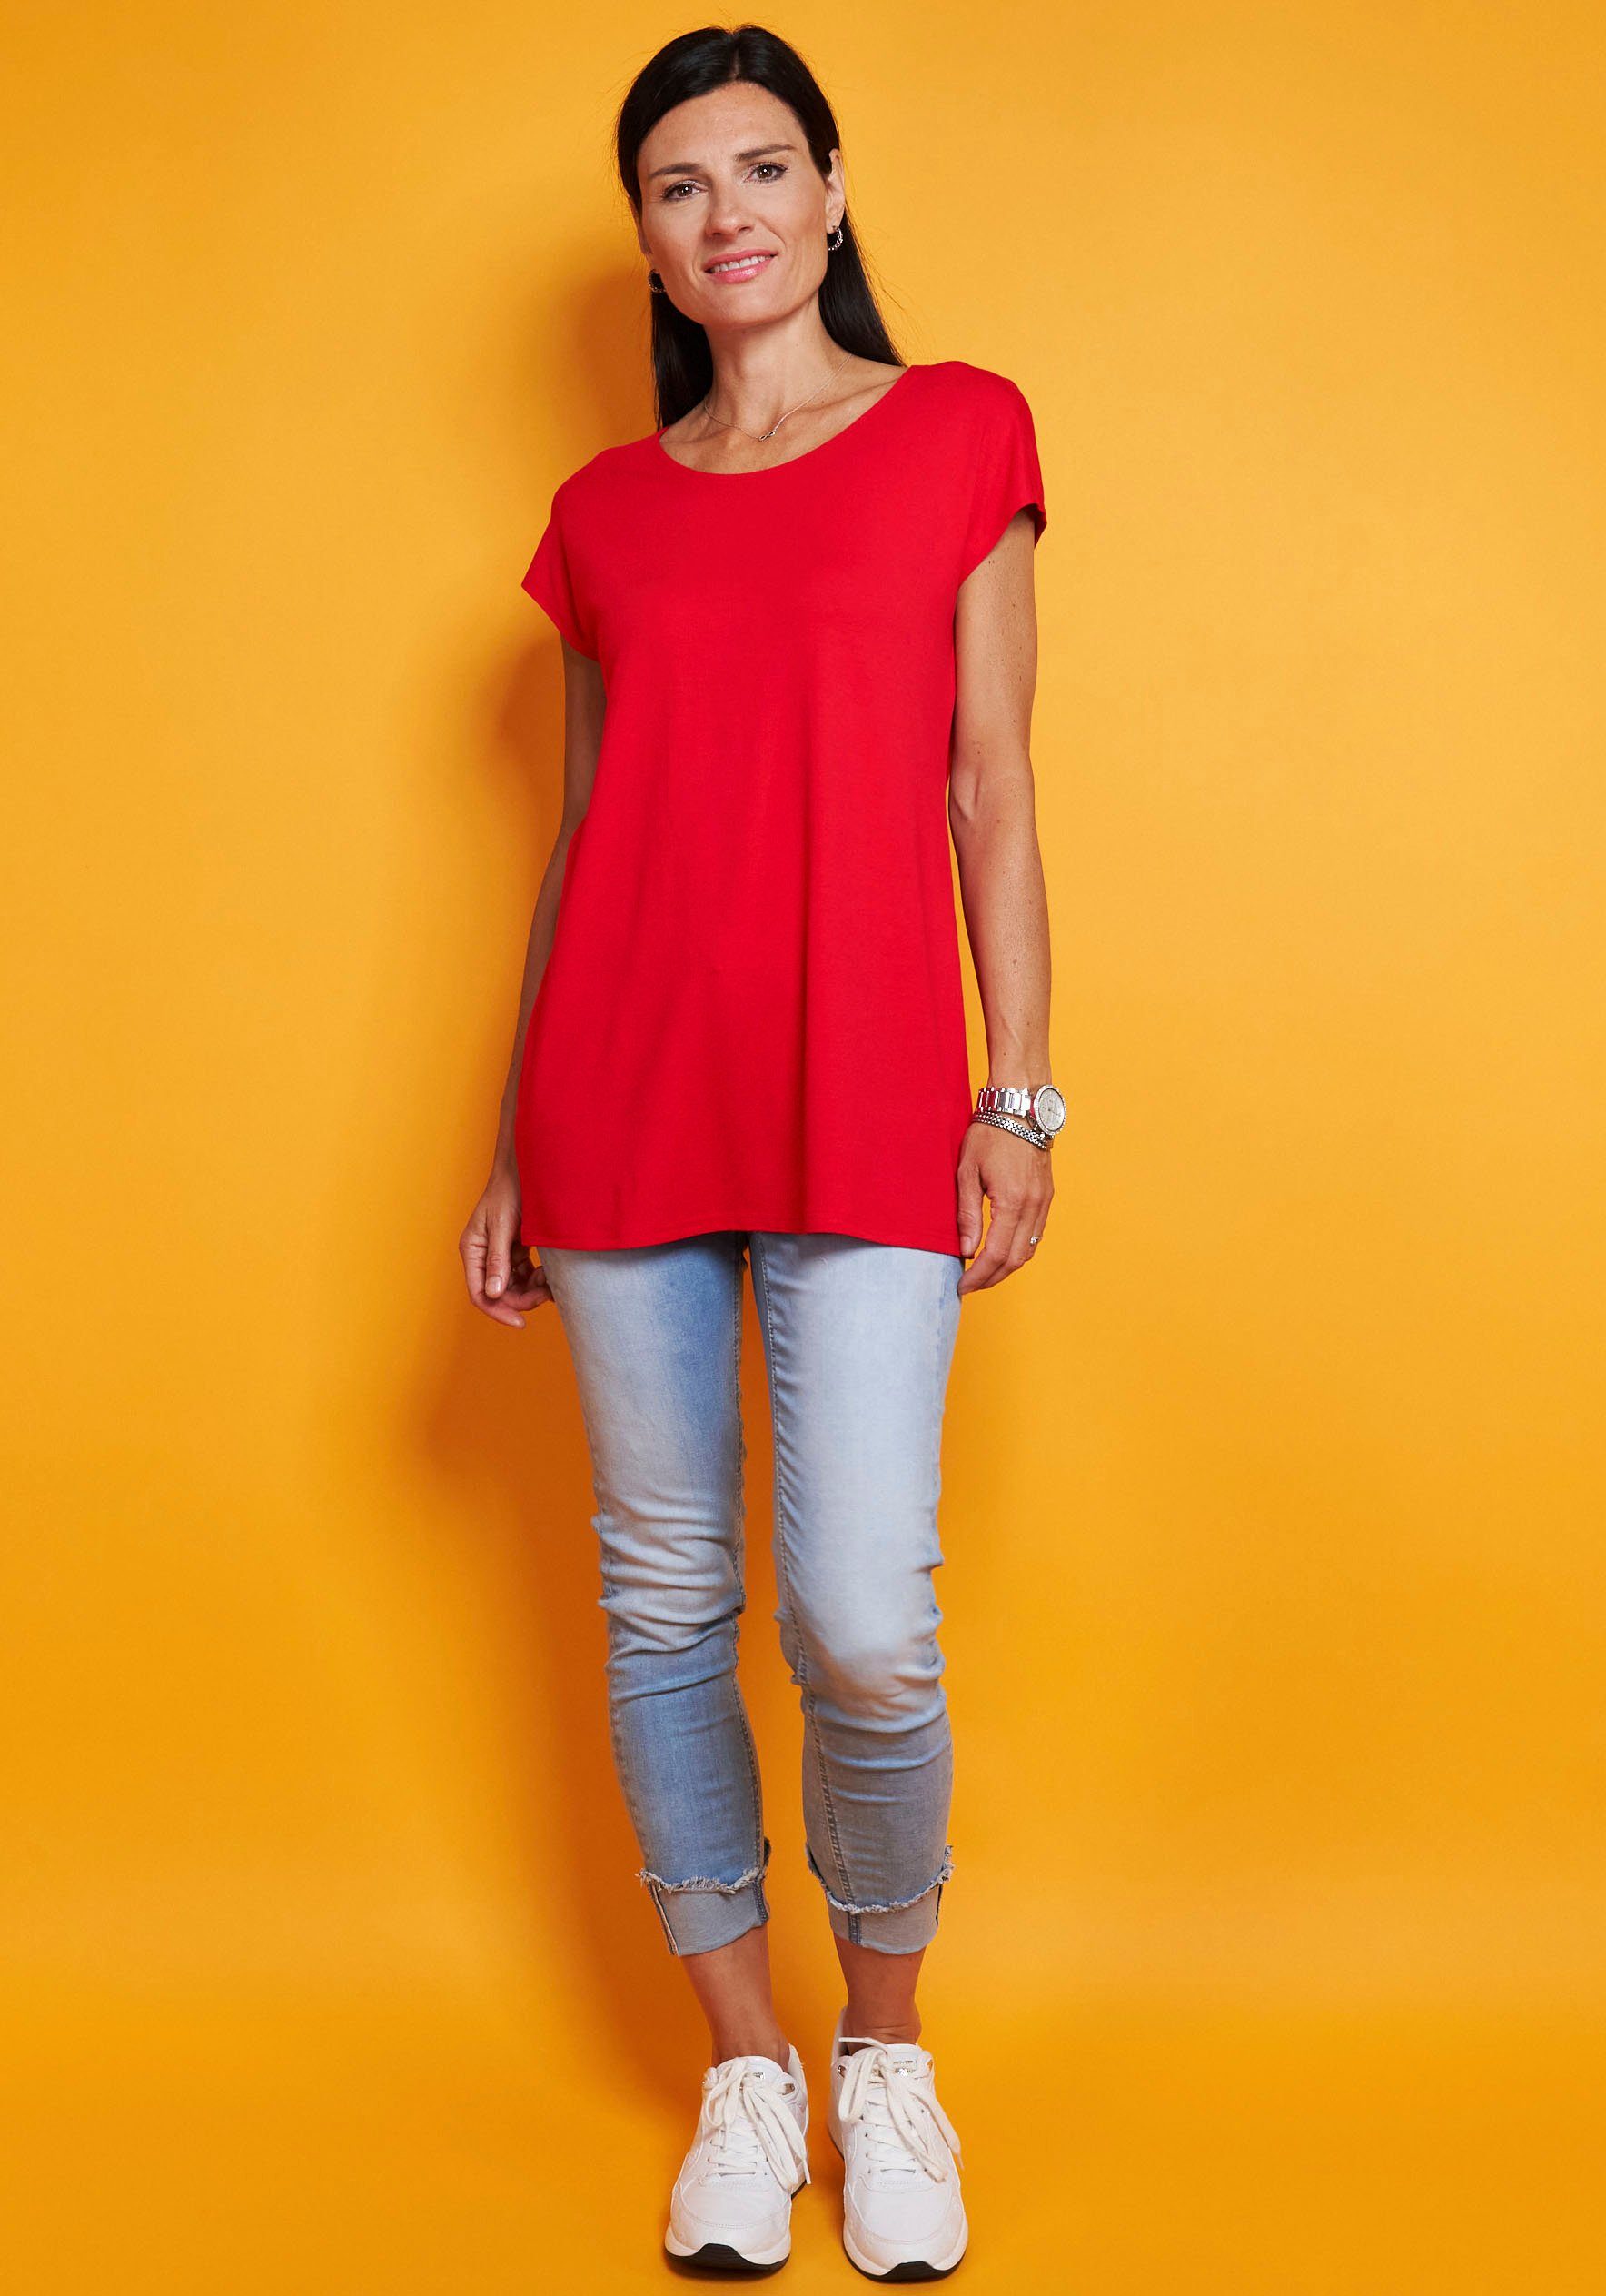 Seidel Moden Longshirt in schlichtem Design rot